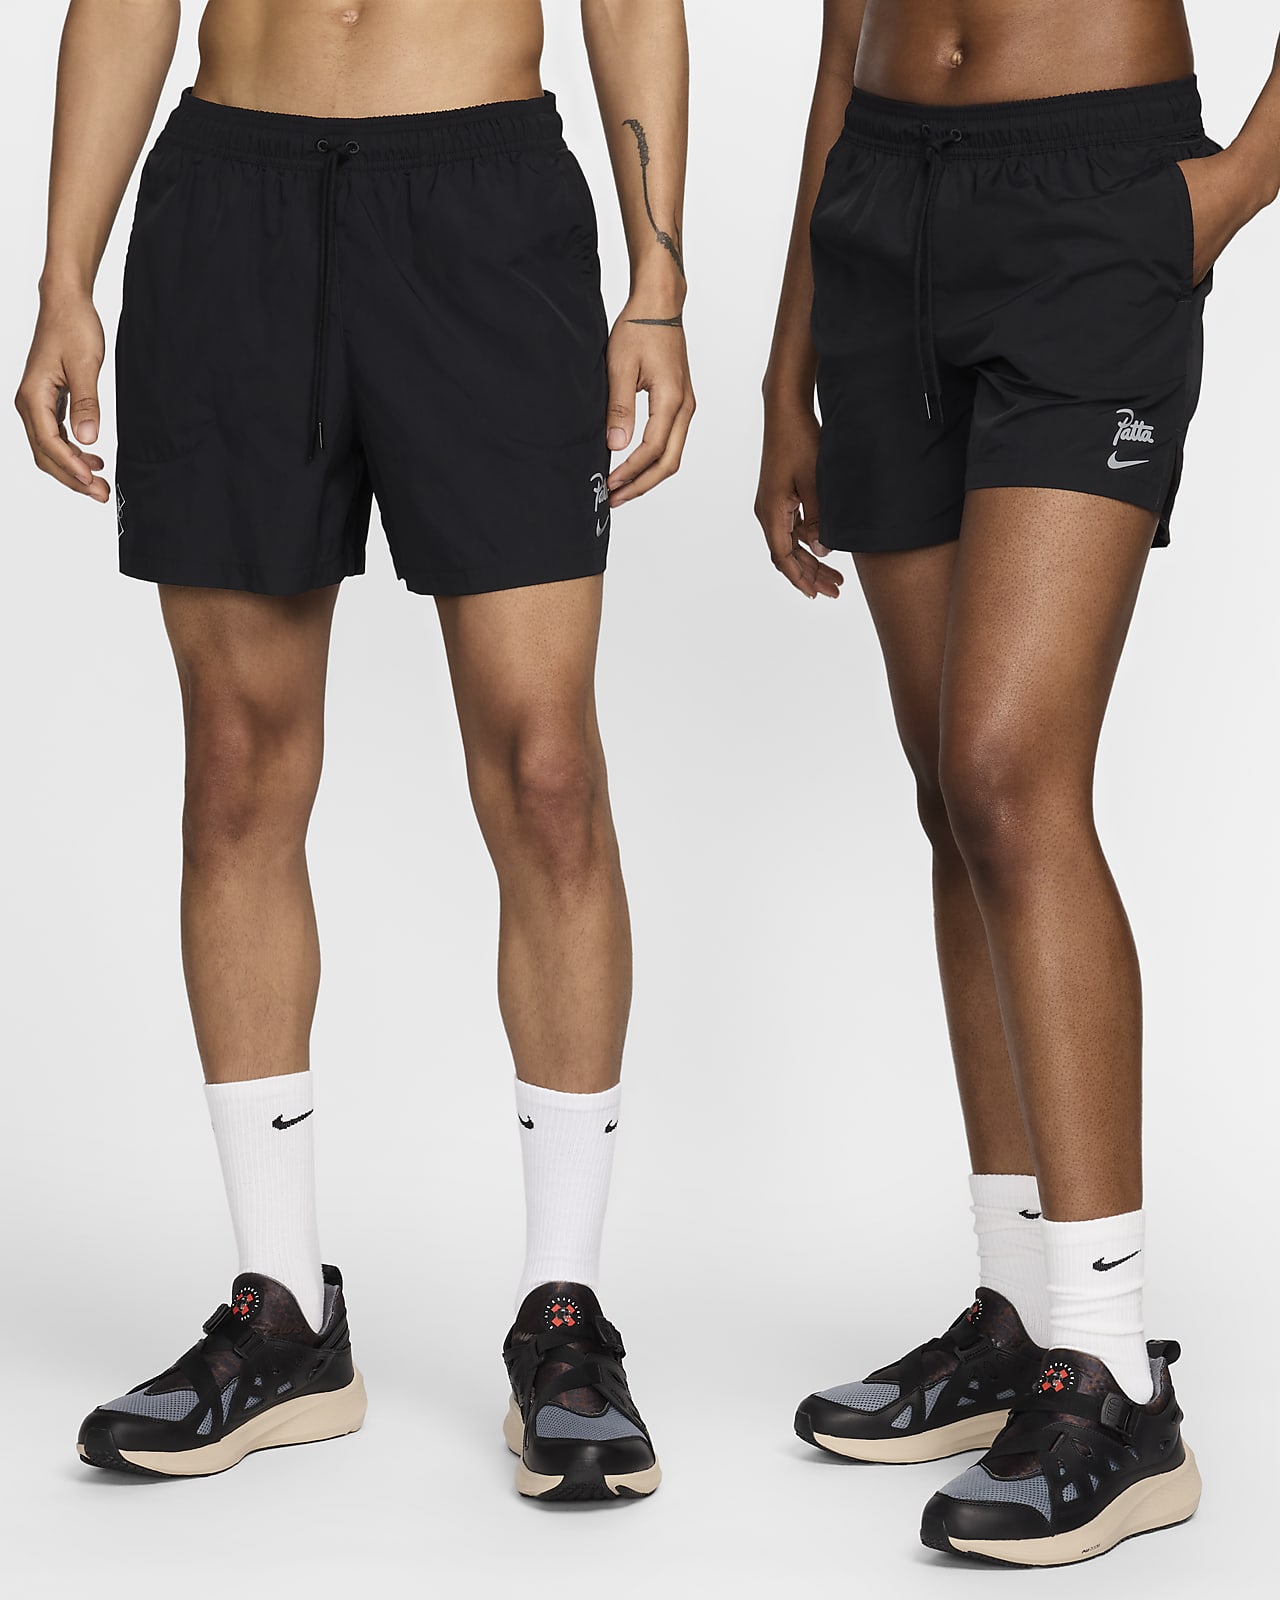 Nike x Patta Men's Shorts